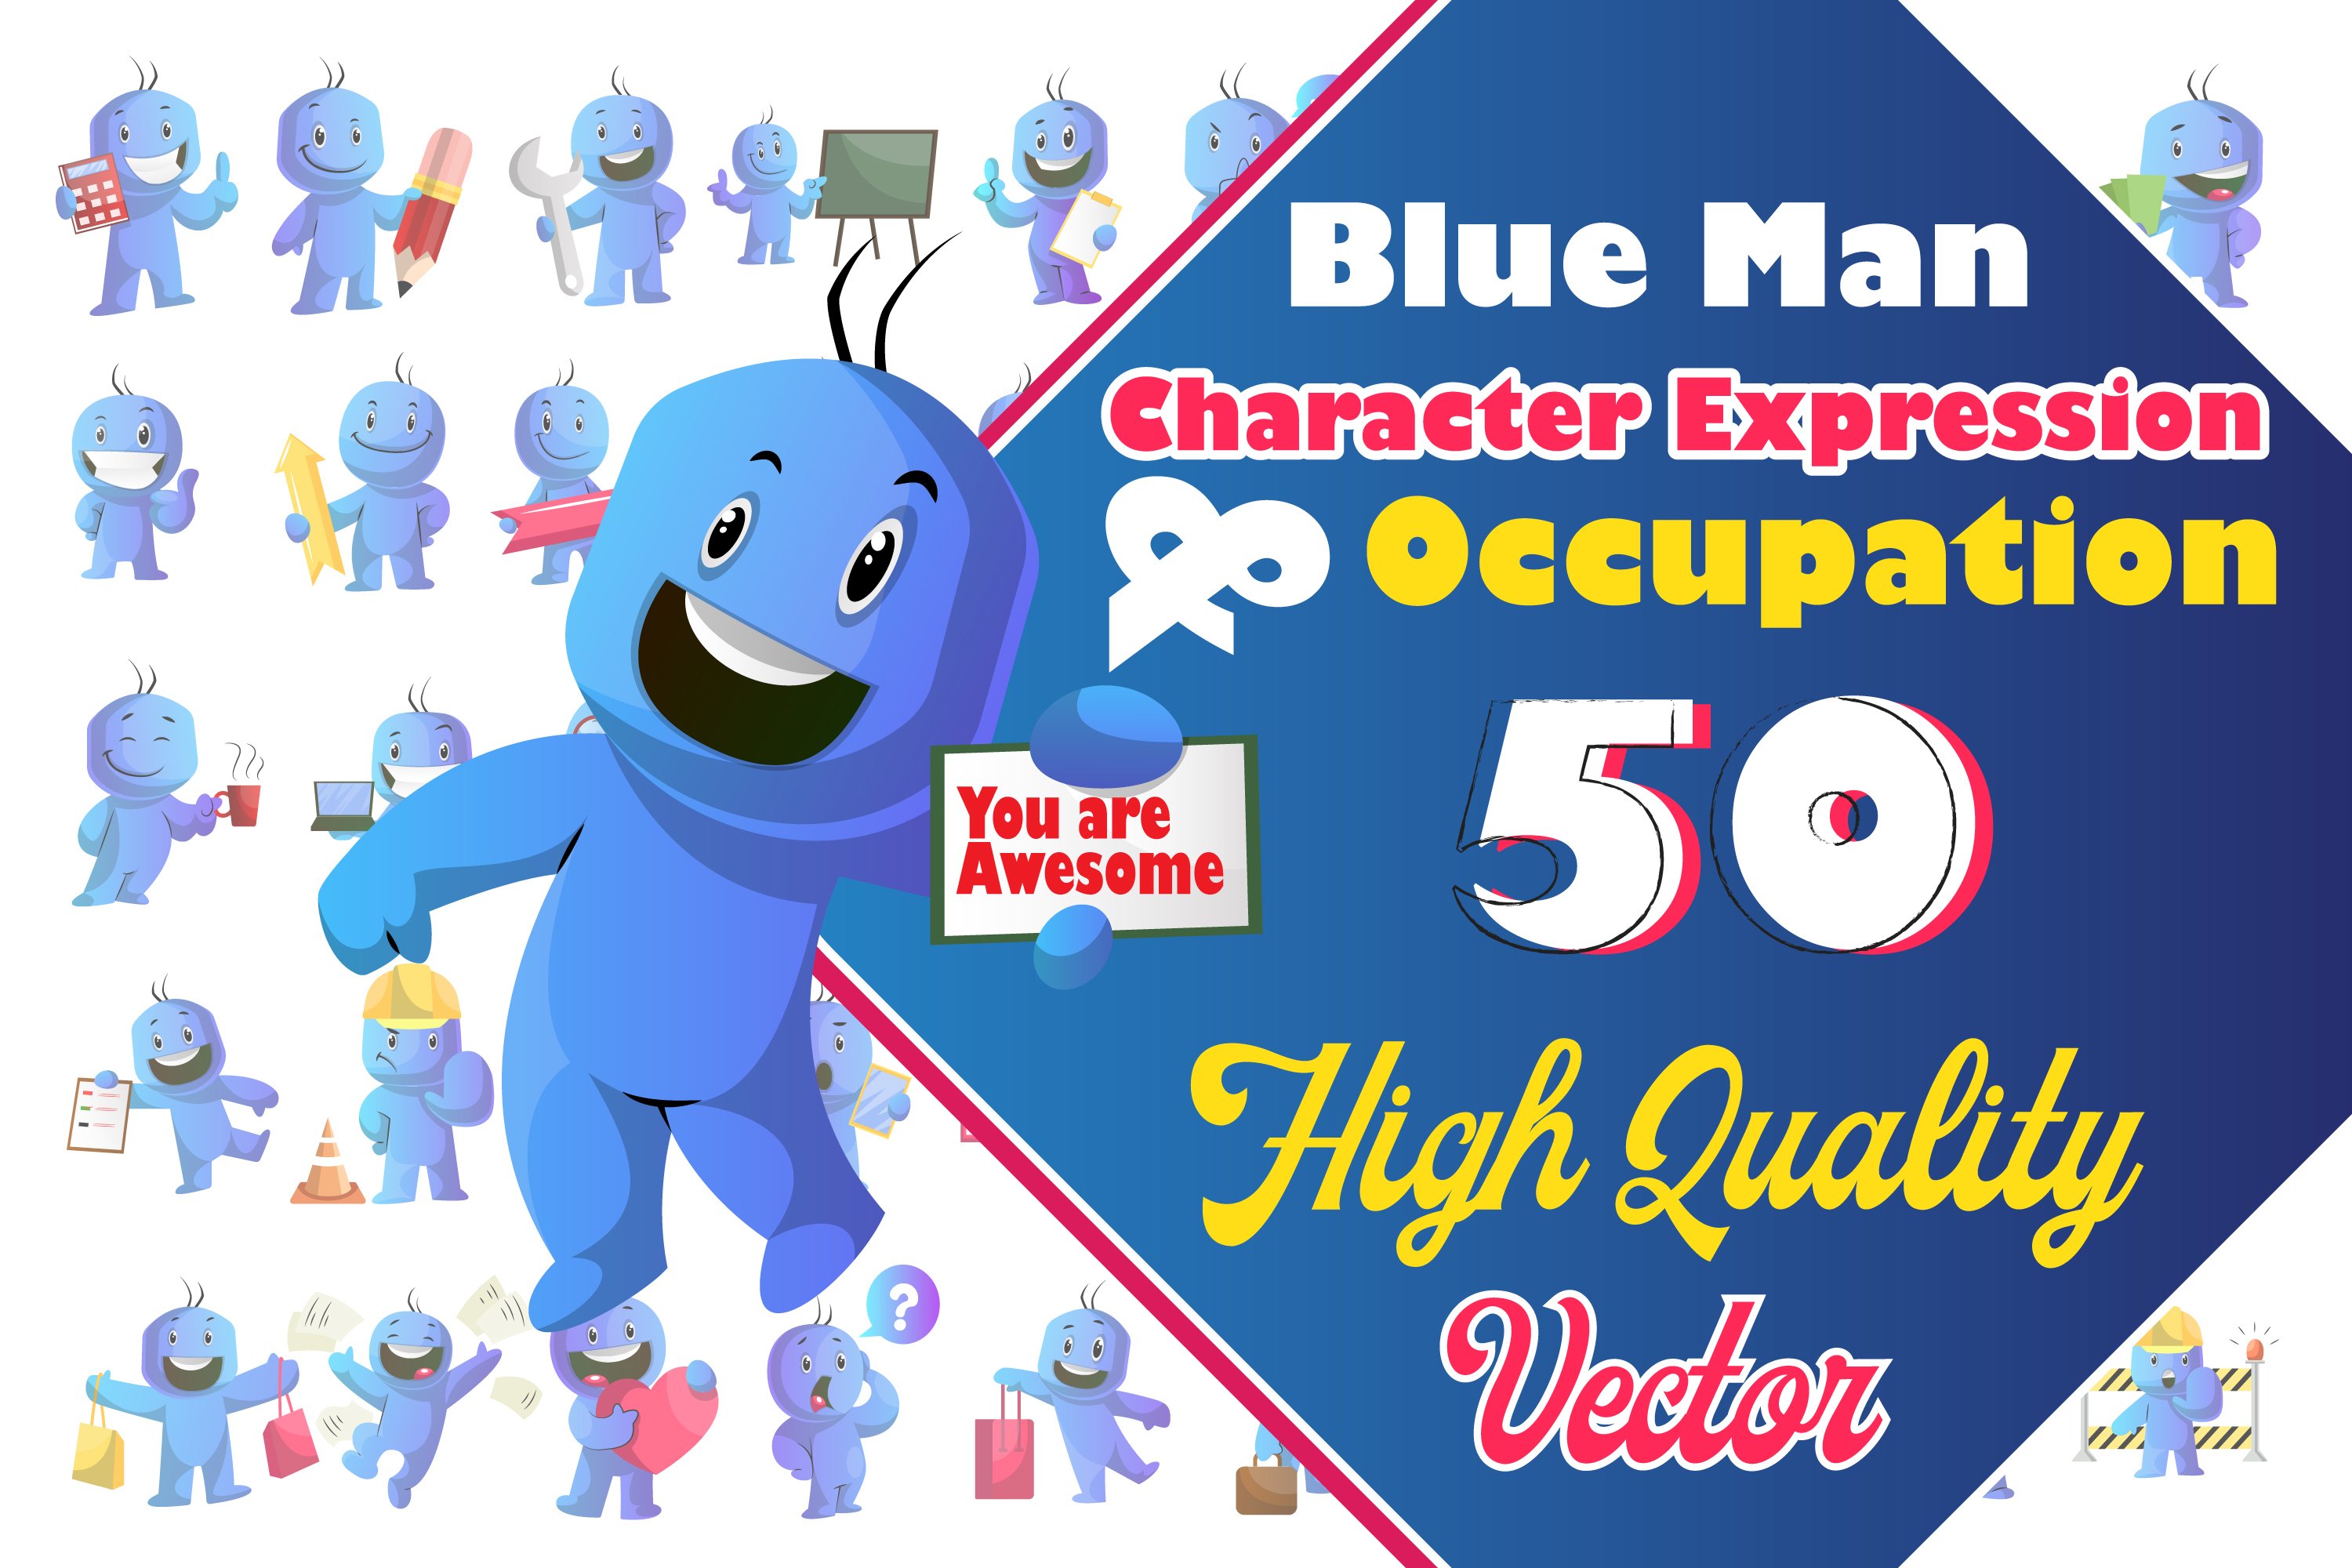 So nice blue man characters.